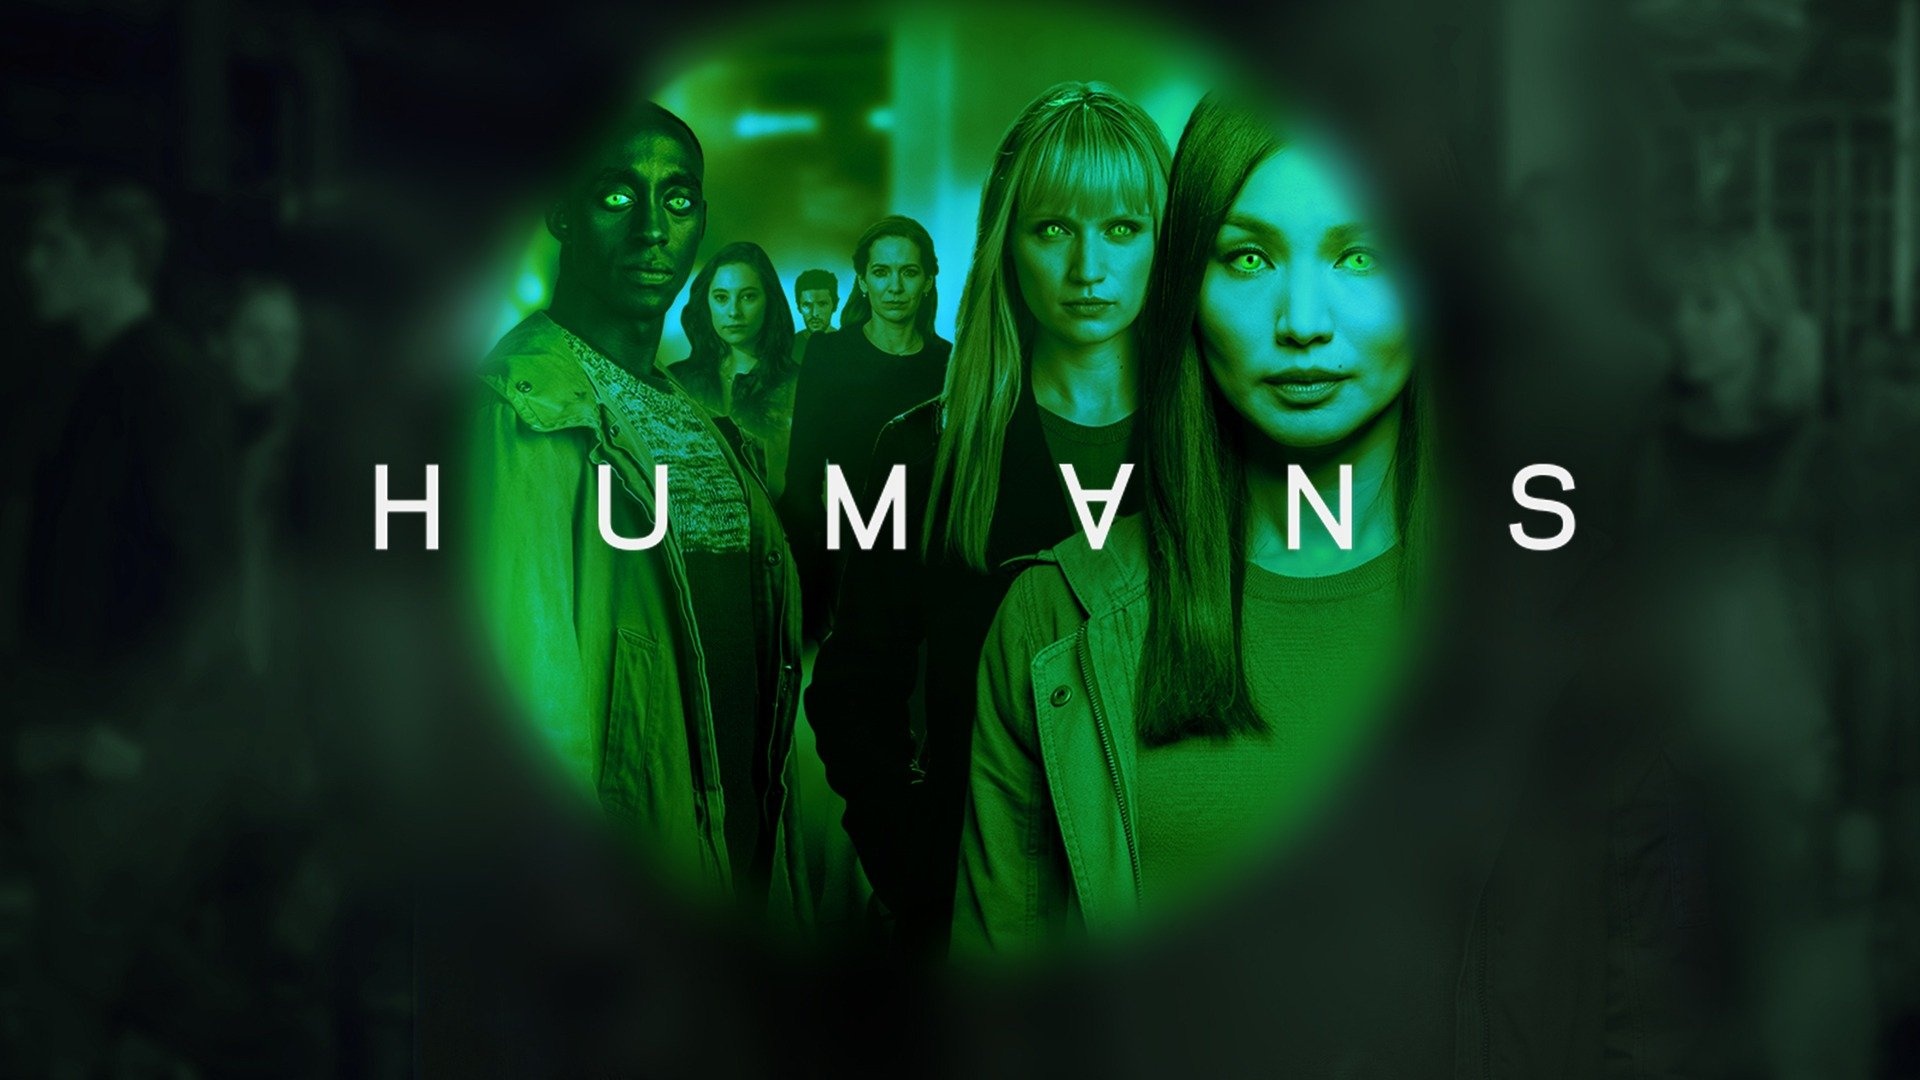 Humans TV Series, Full episodes online, Streaming on Plex, Complete series watch, 1920x1080 Full HD Desktop